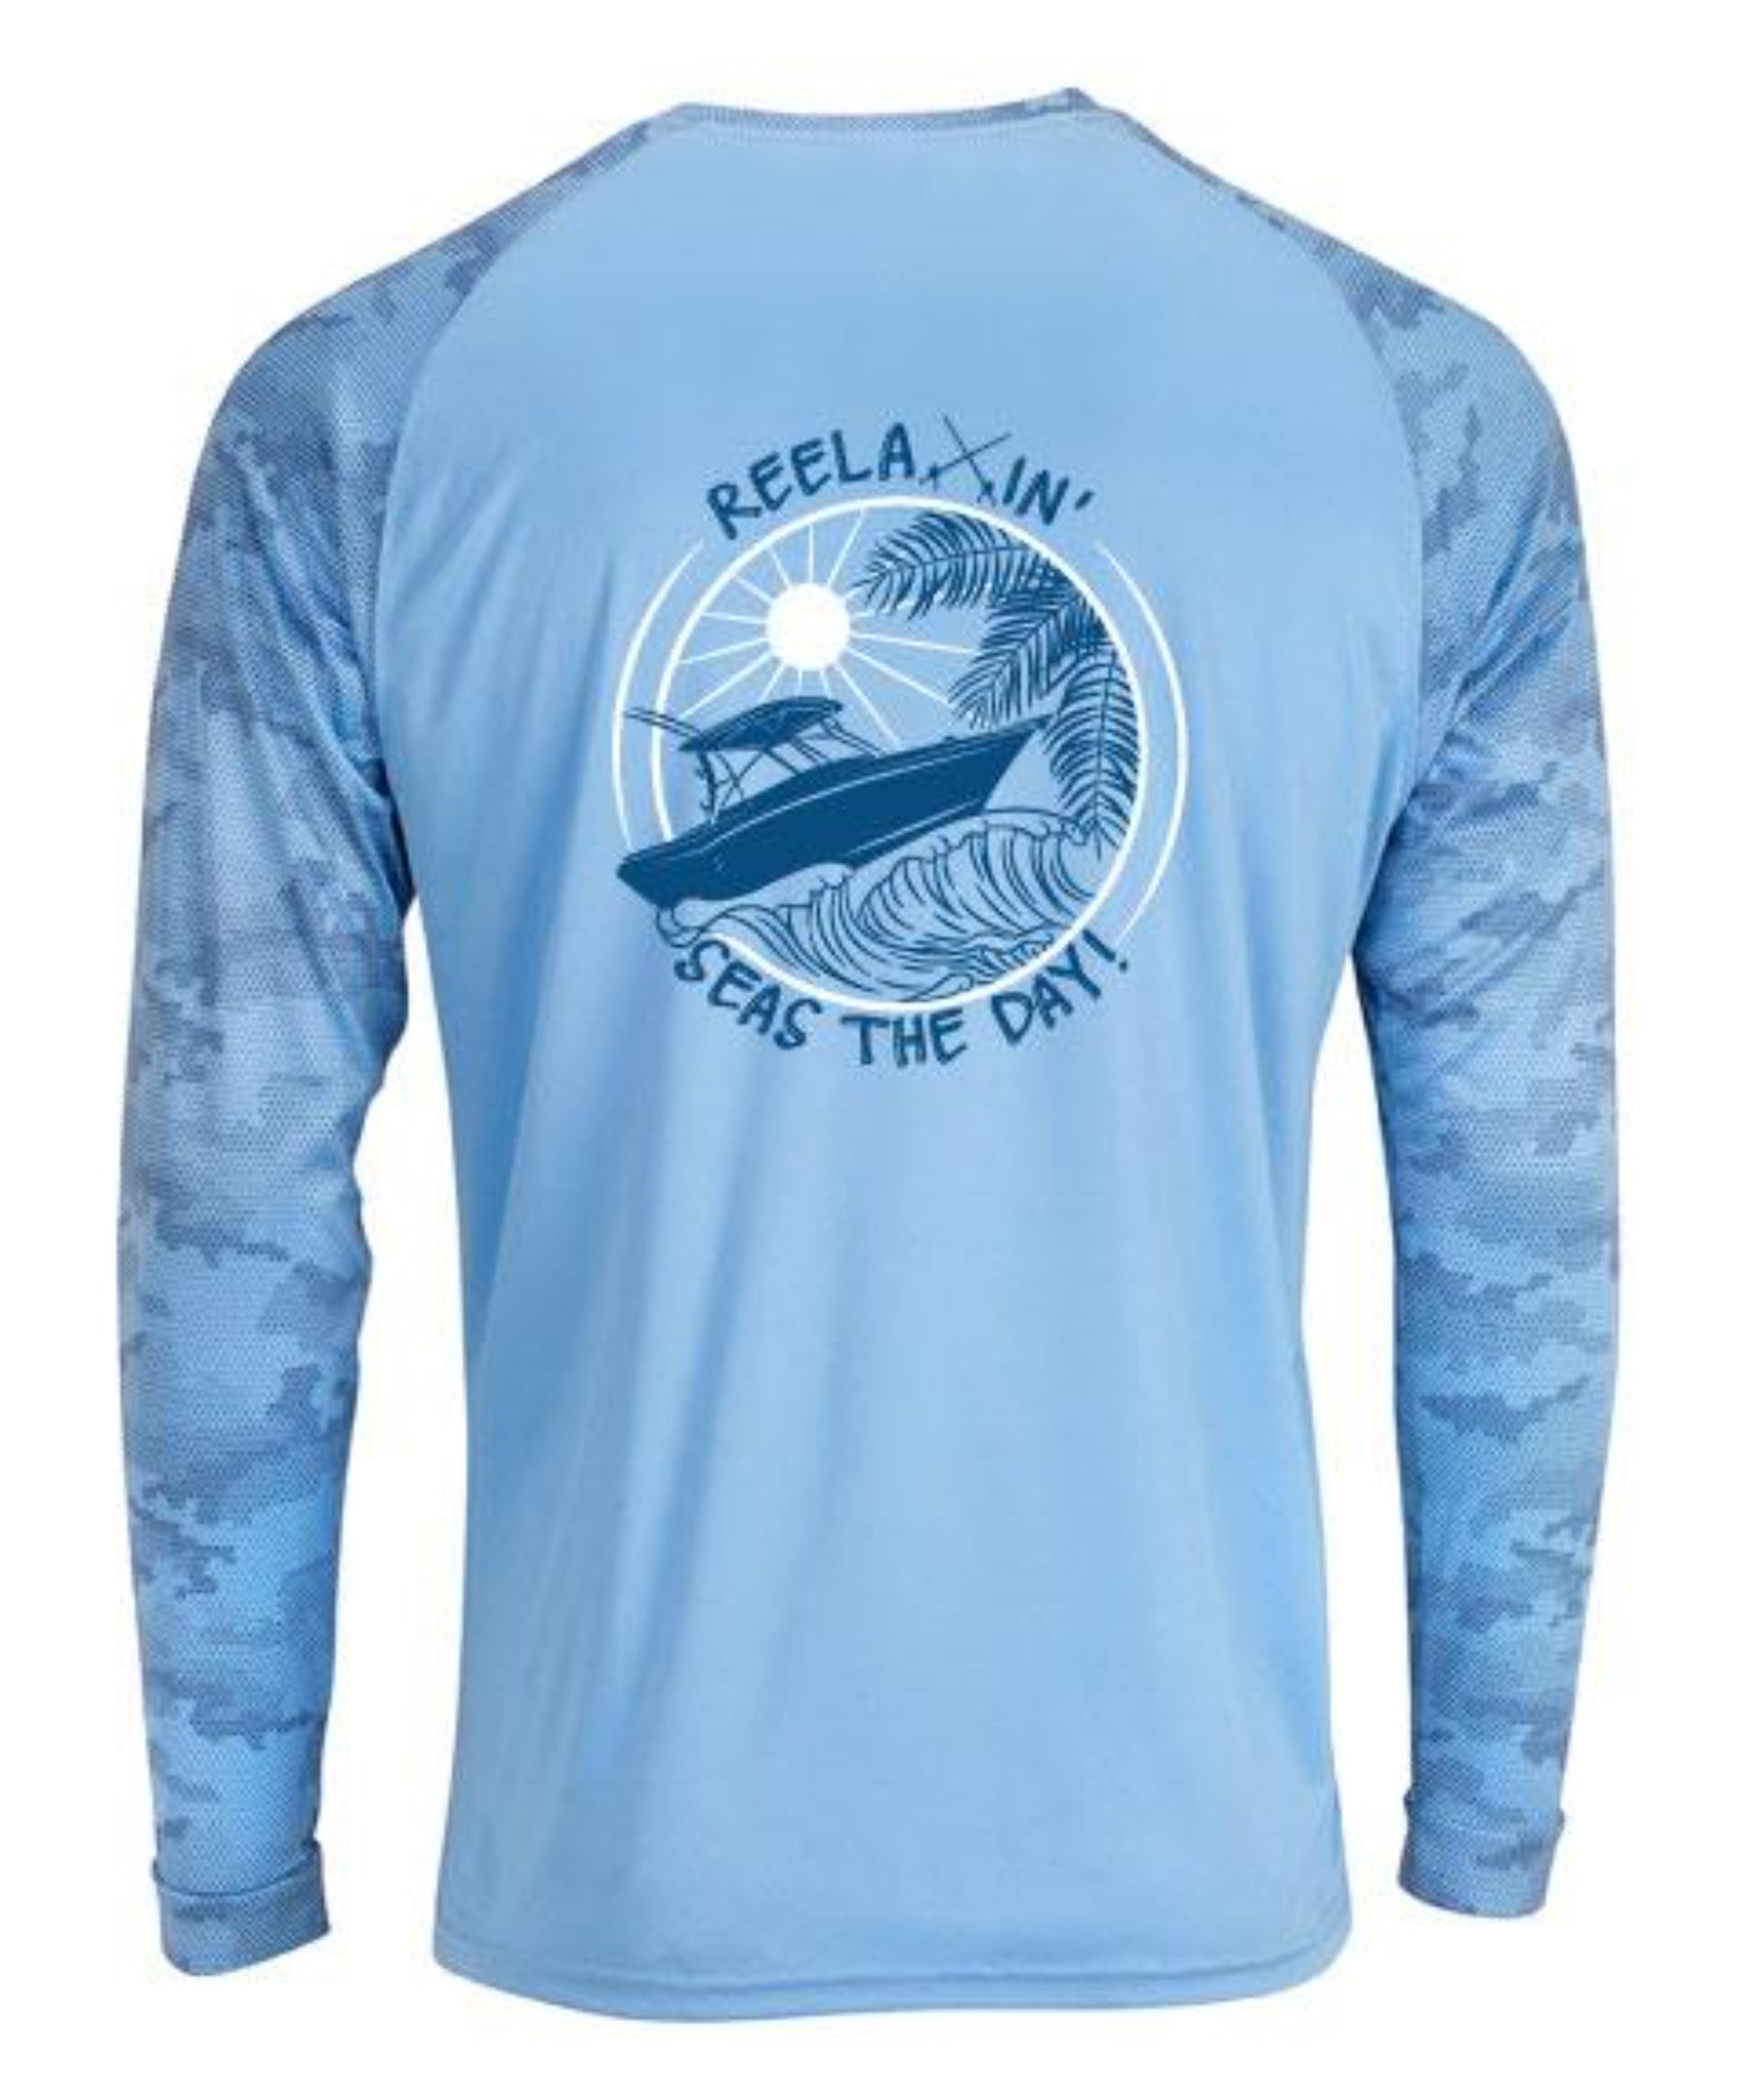 Blue Mist Reelaxin' Digital Camo Performance Dry-Fit Fishing Long Sleeve Shirts, 50+ UPF Sun Protection  - Reel Fishy Apparel